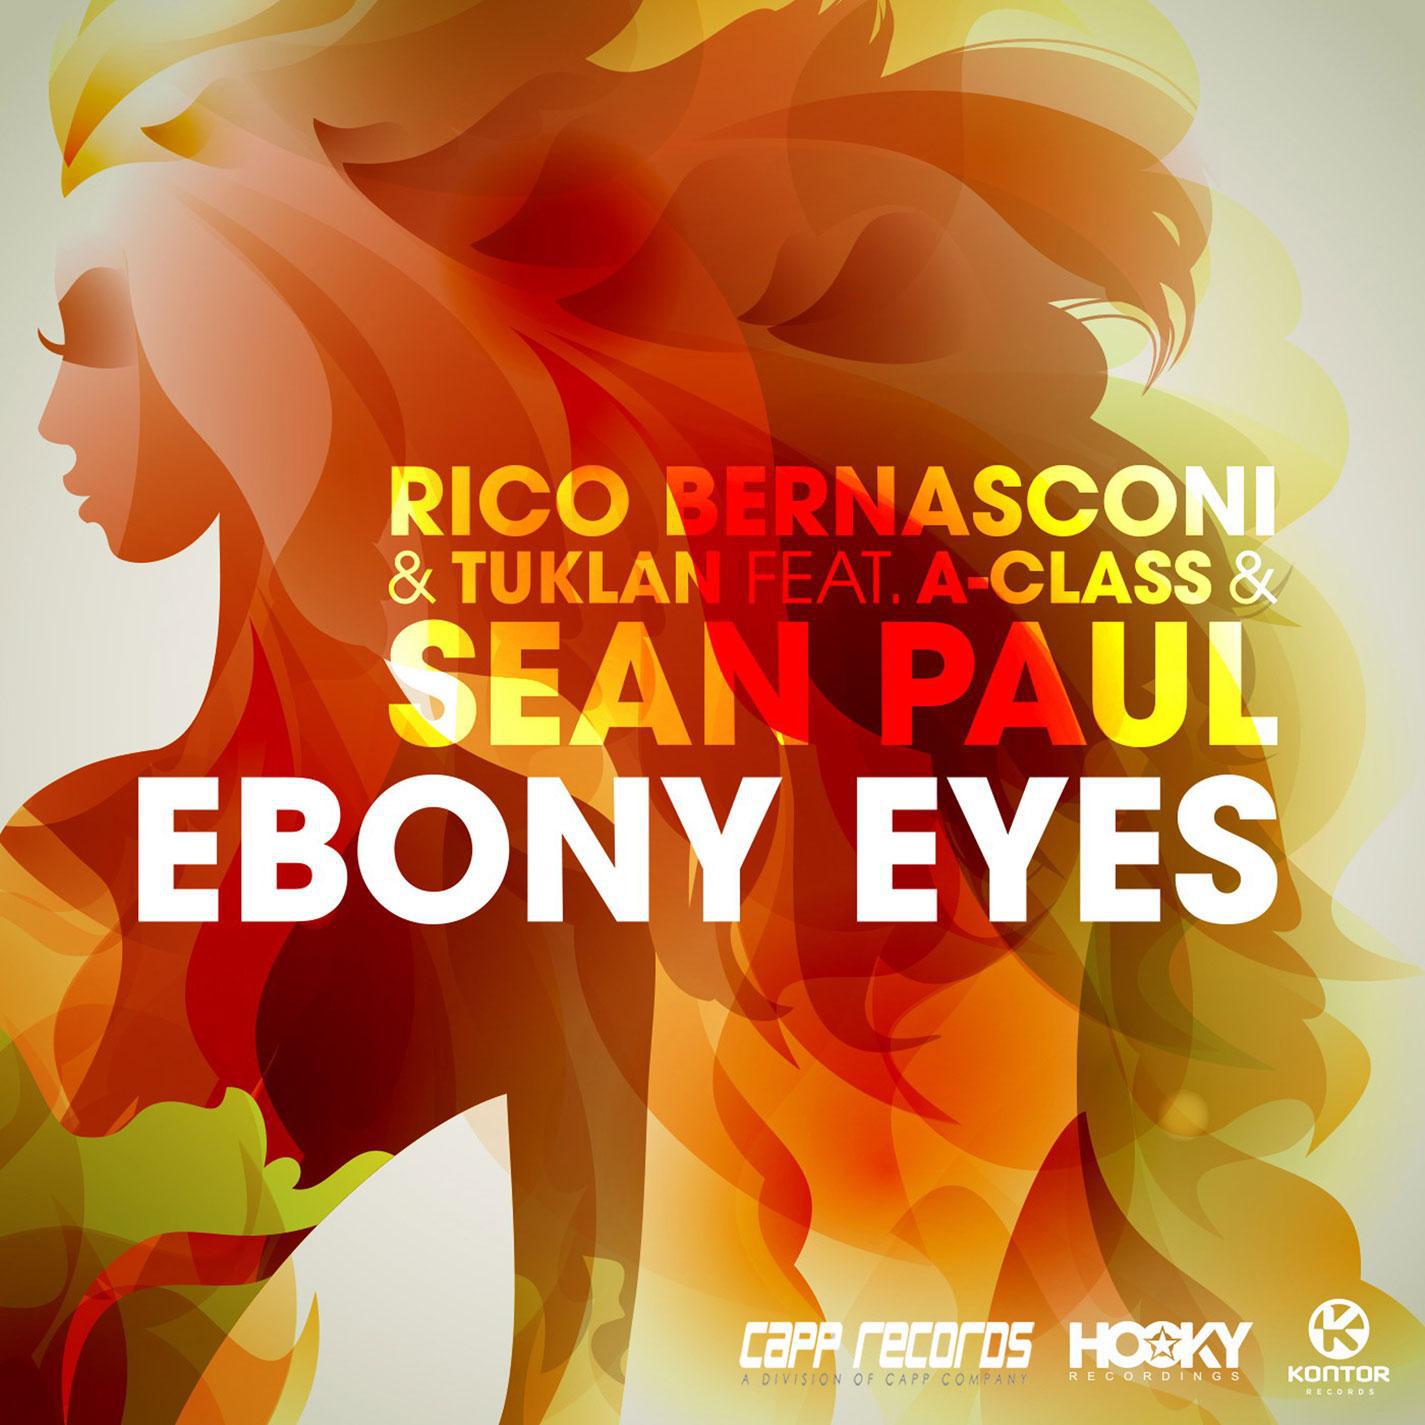 Rico Bernasconi - Ebony Eyes (feat. A-Class & Sean Paul) (CJ Stone Edit)